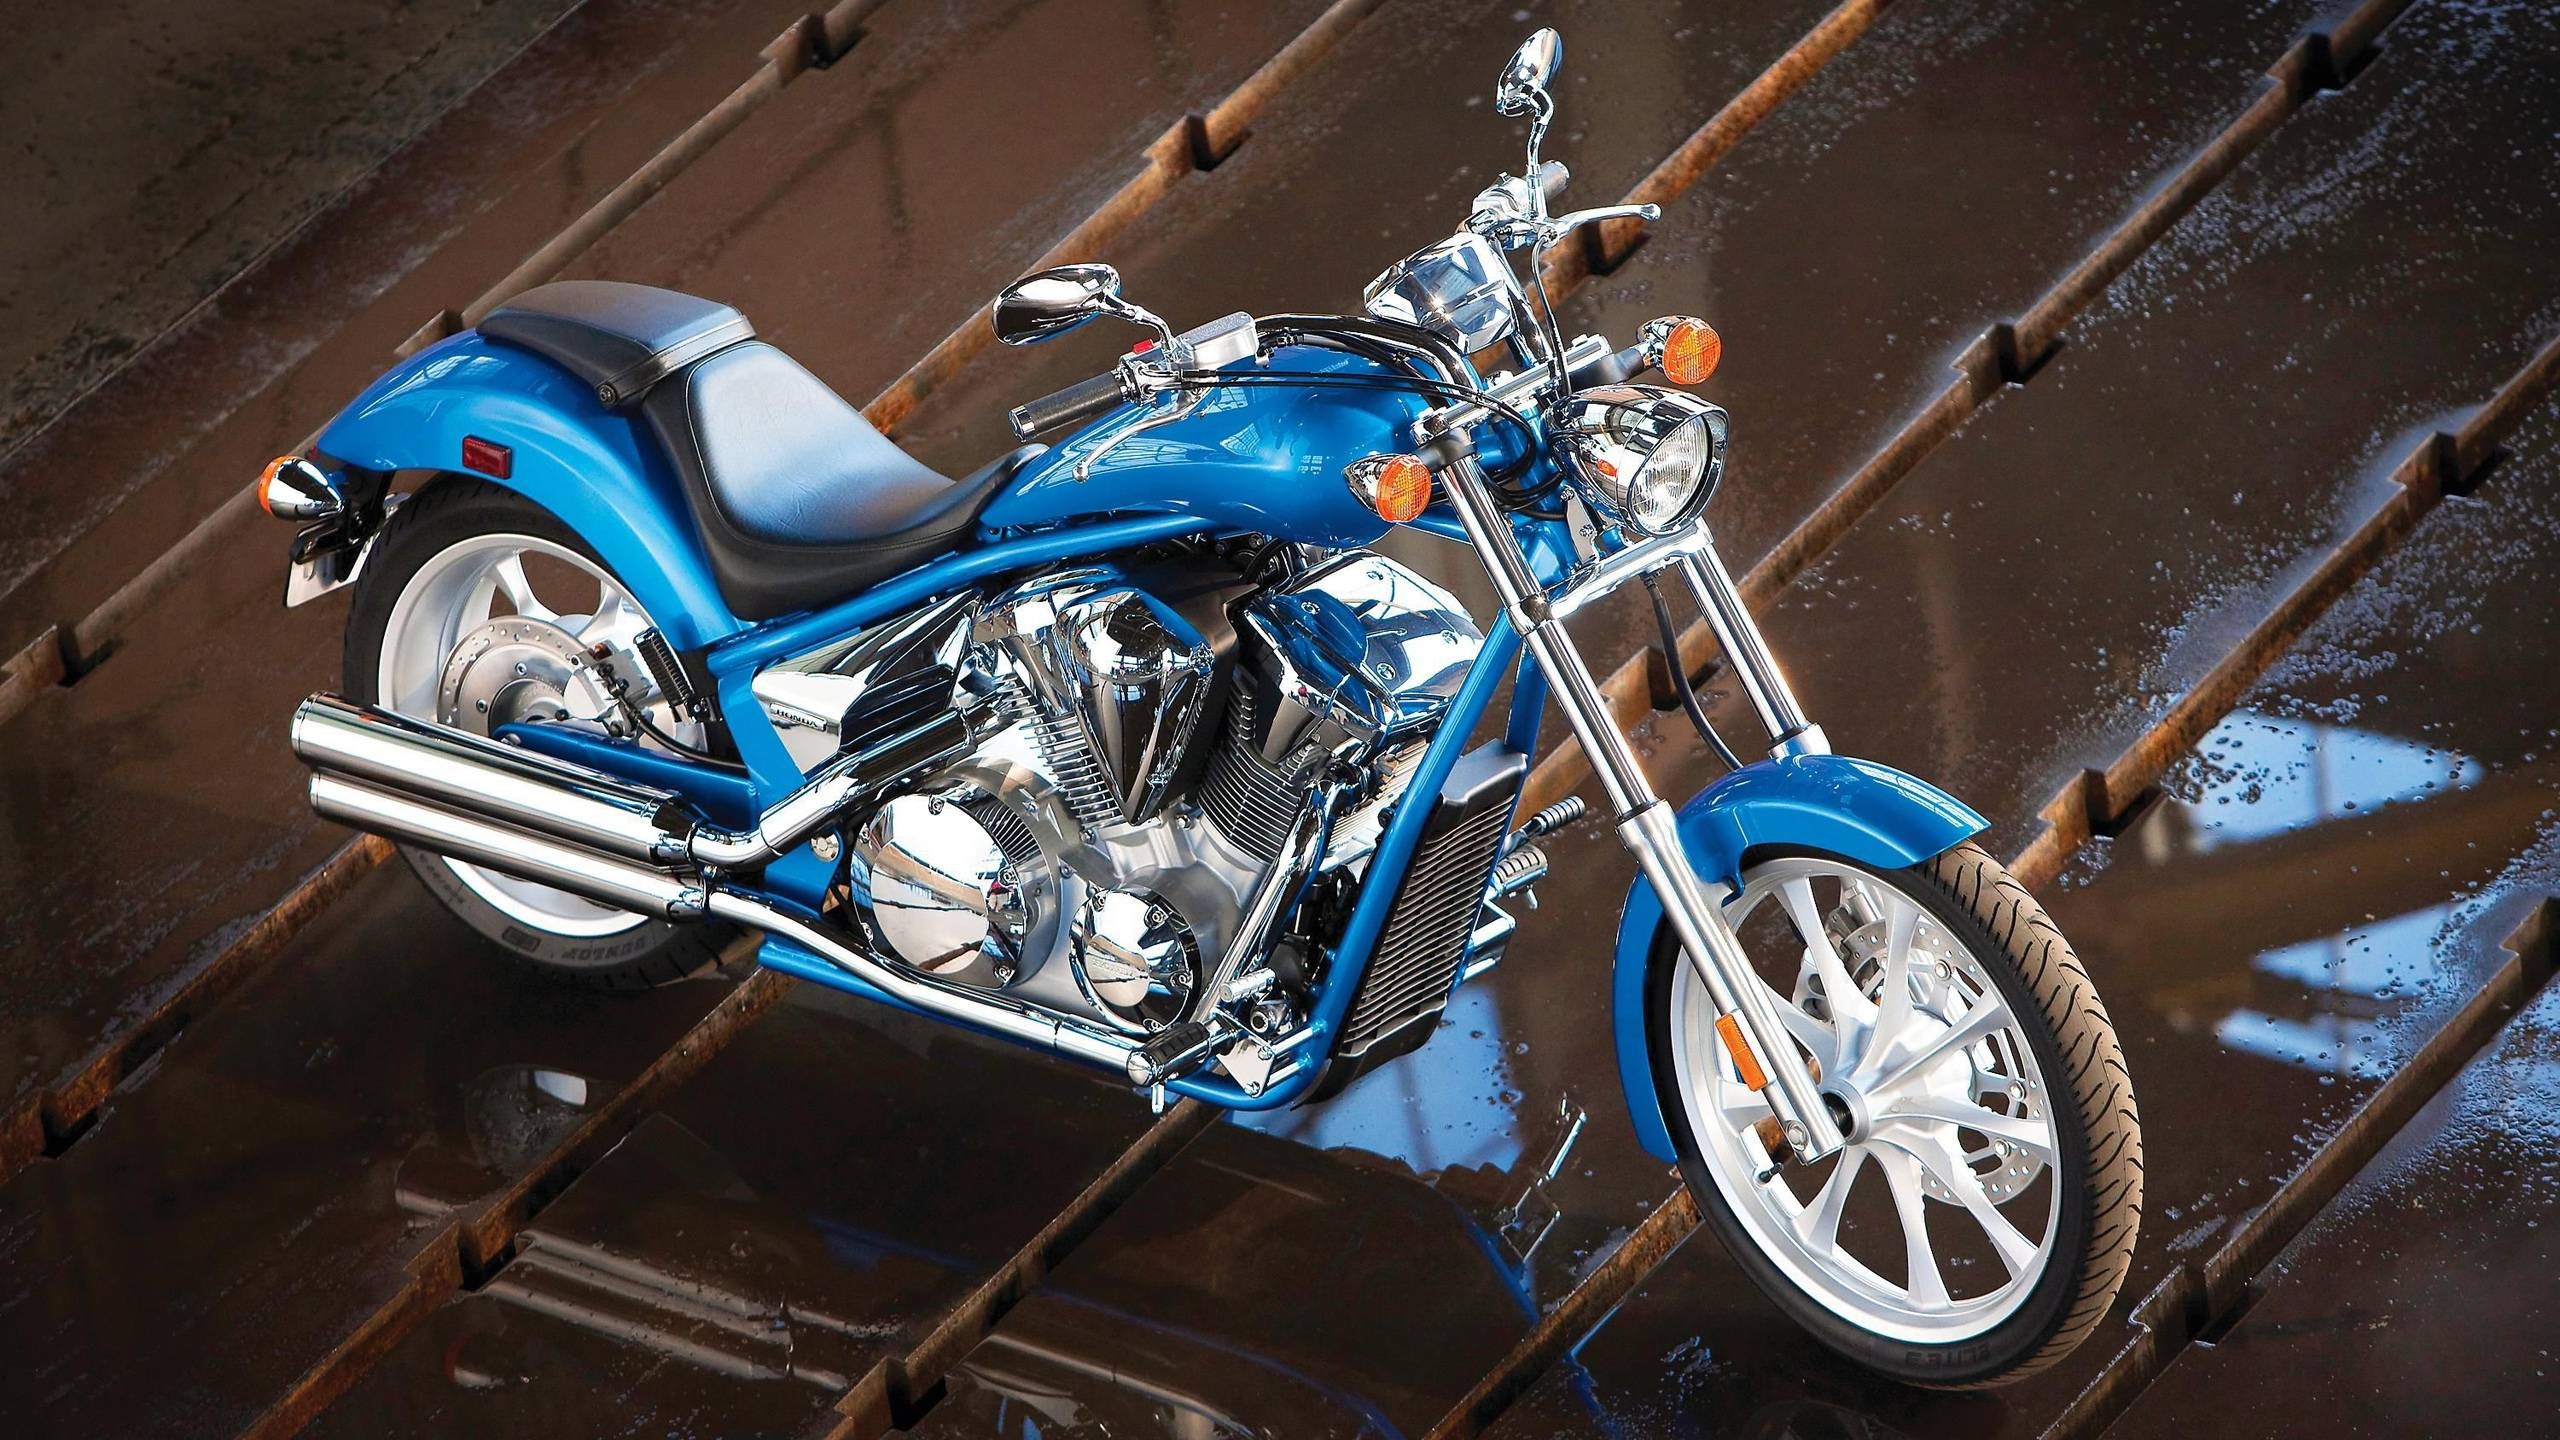 General 2560x1440 motorcycle vehicle blue Honda Japanese motorcycles side view headlights engine wheels